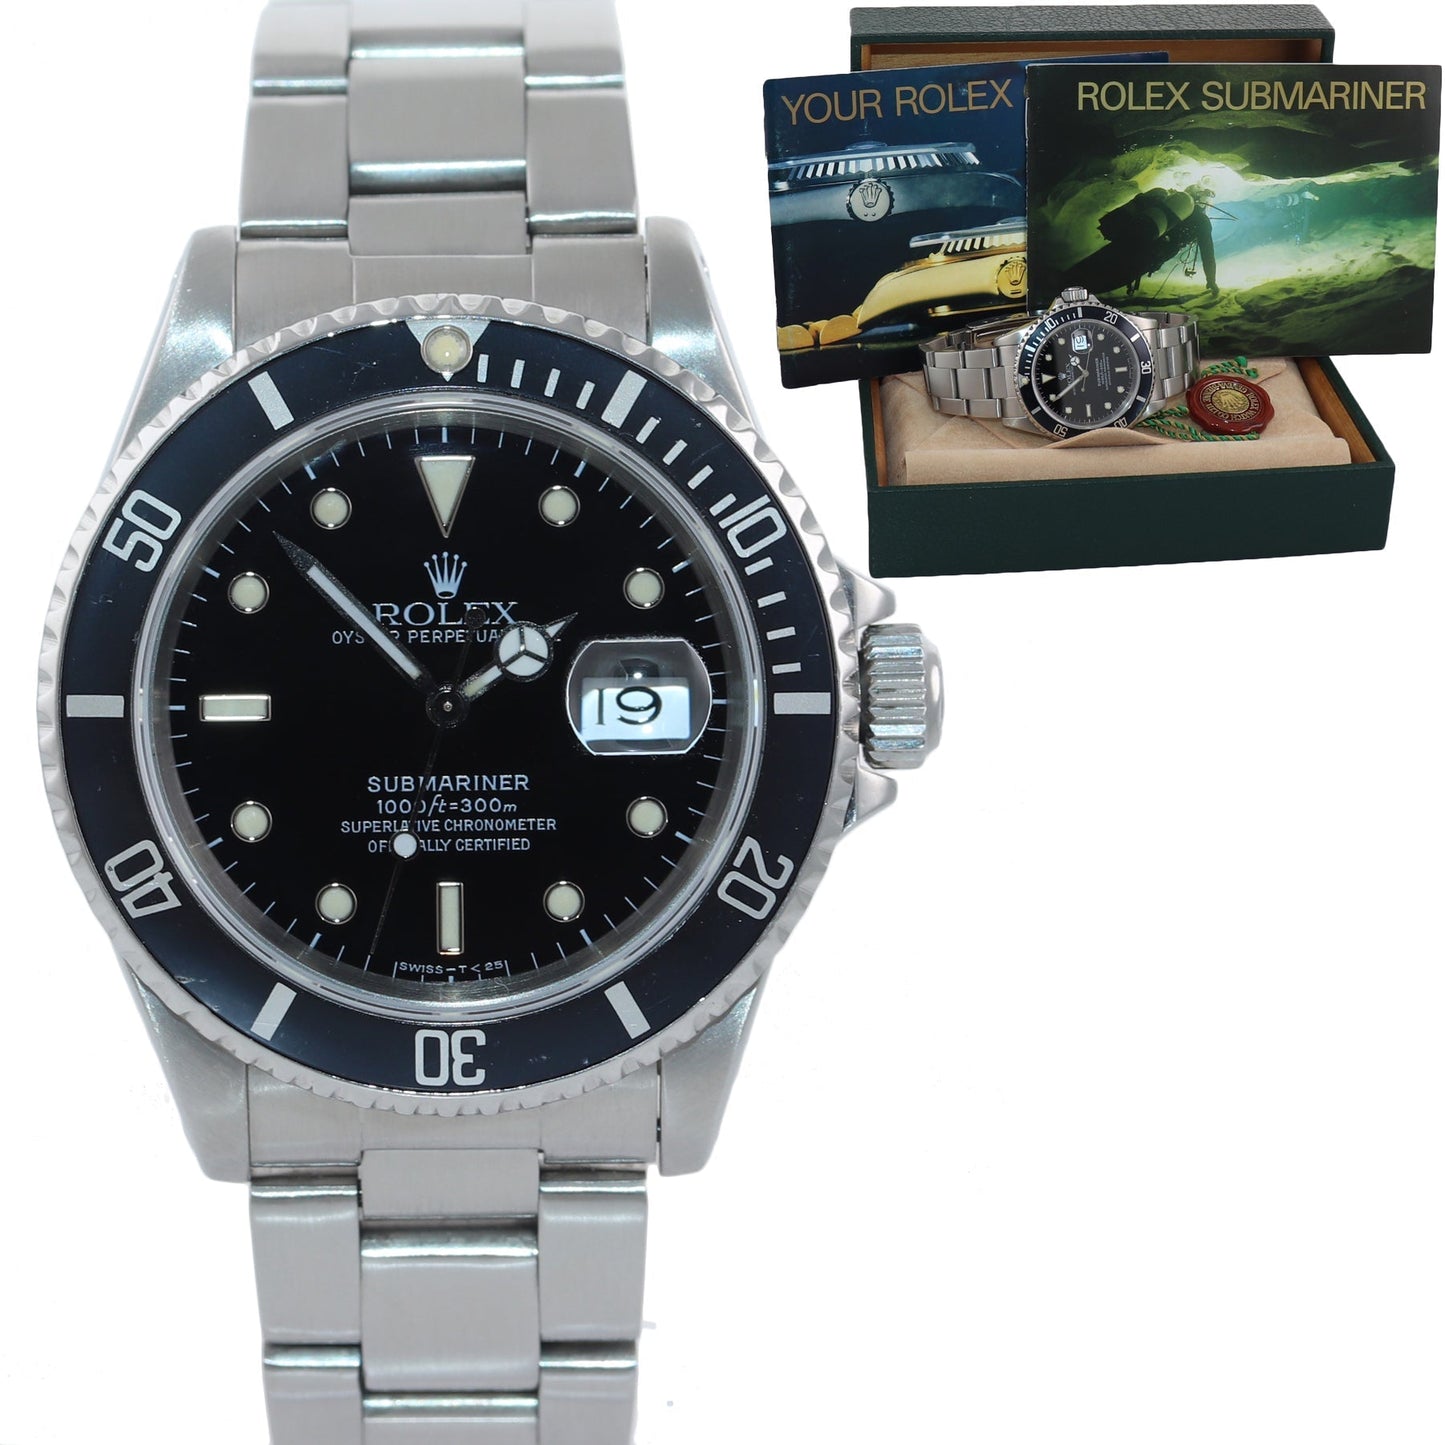 MINT Rolex Submariner Date 16610 Steel Black 40mm Oyster Watch Box